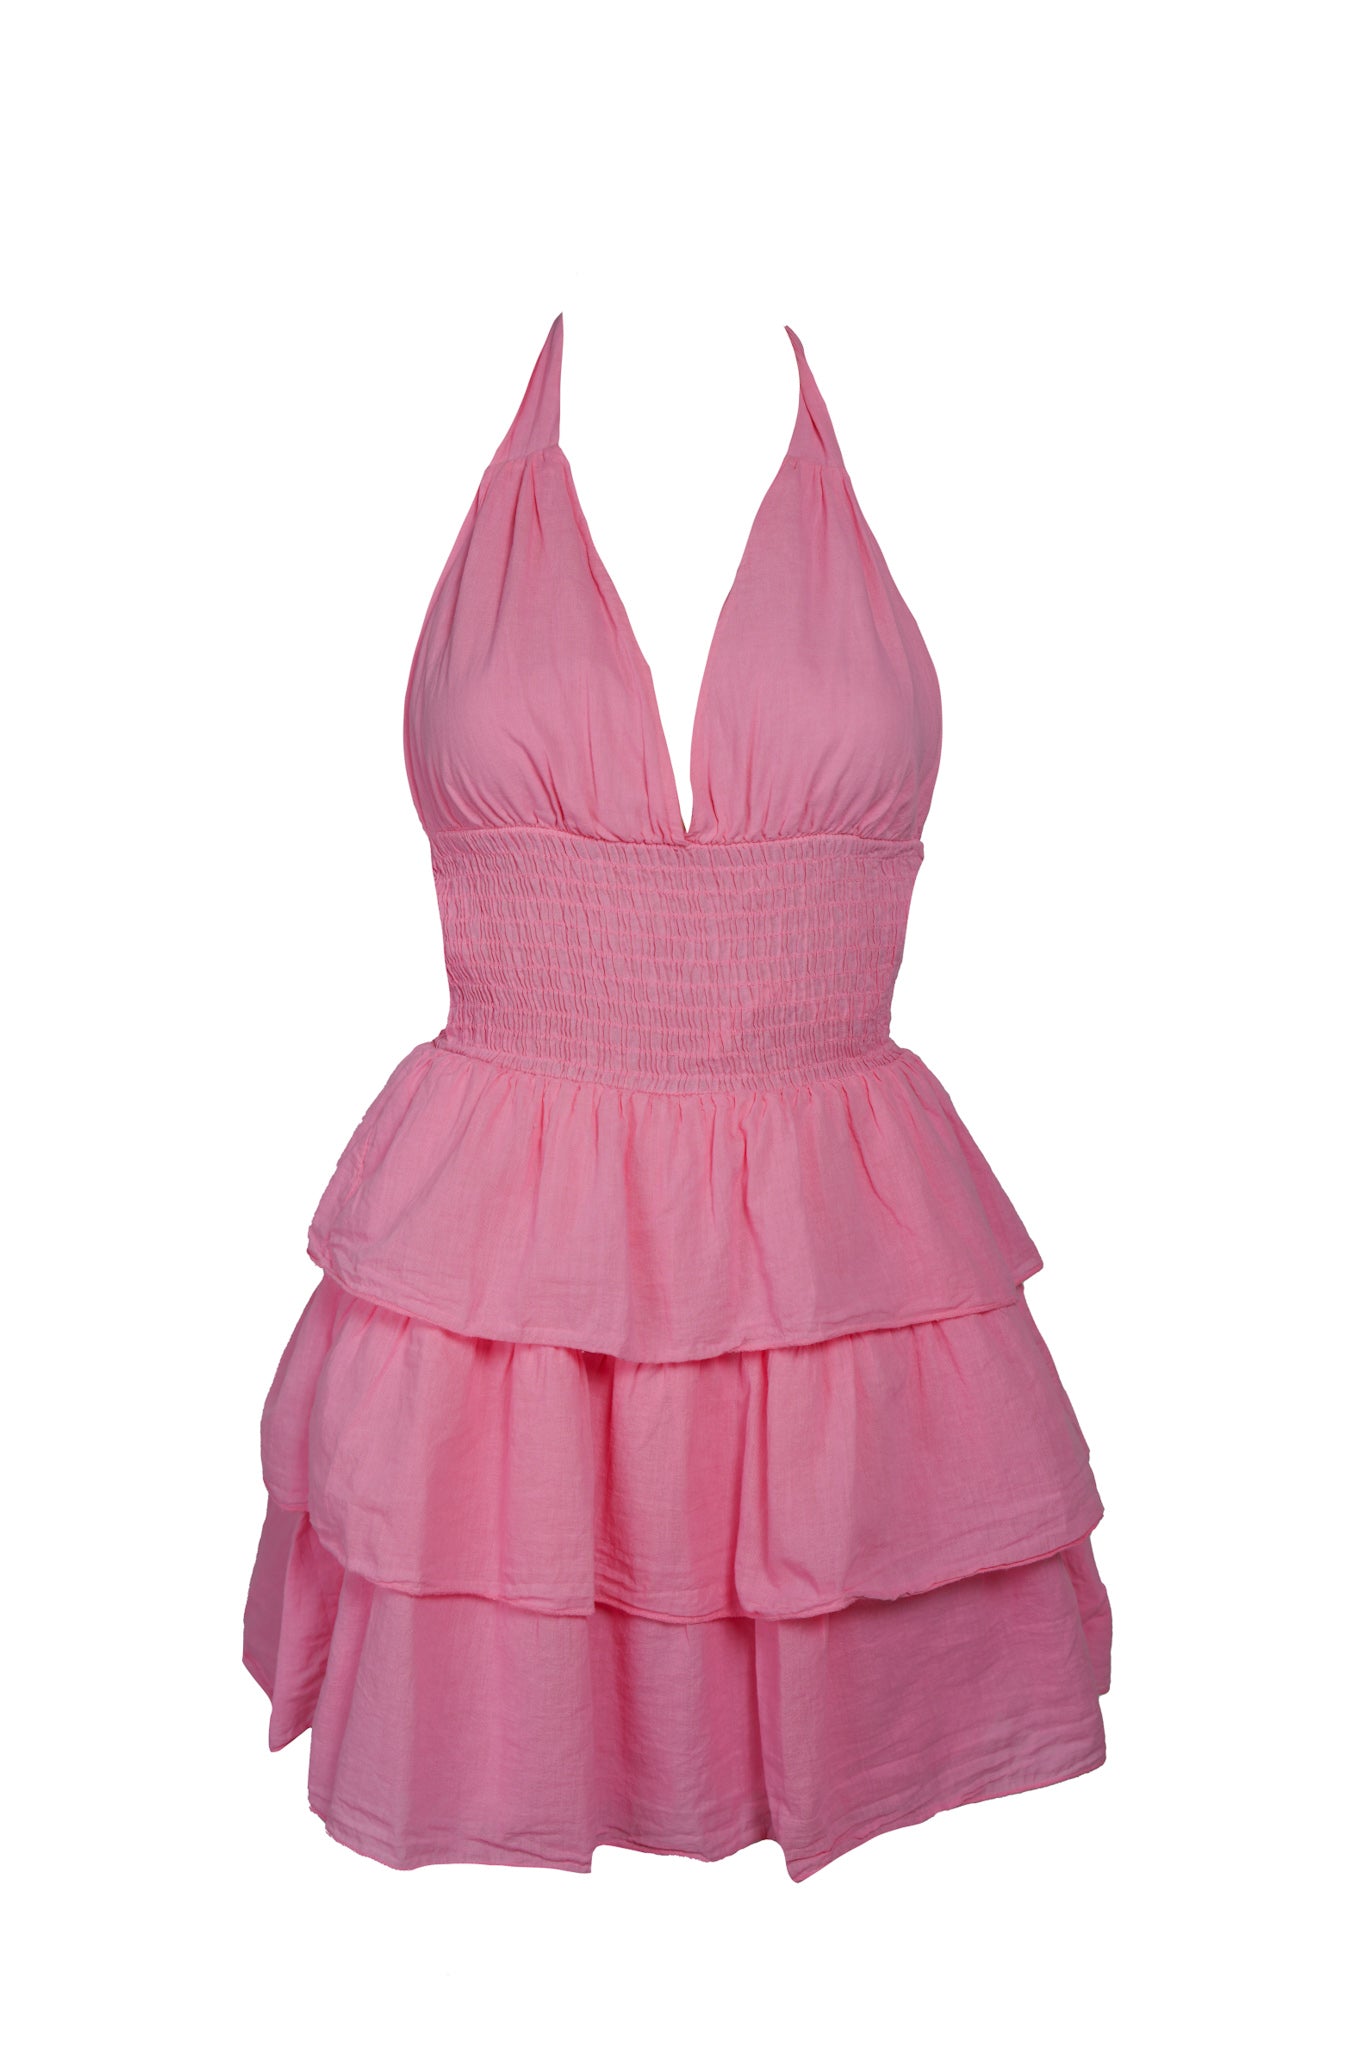 "Sofia" dress pink